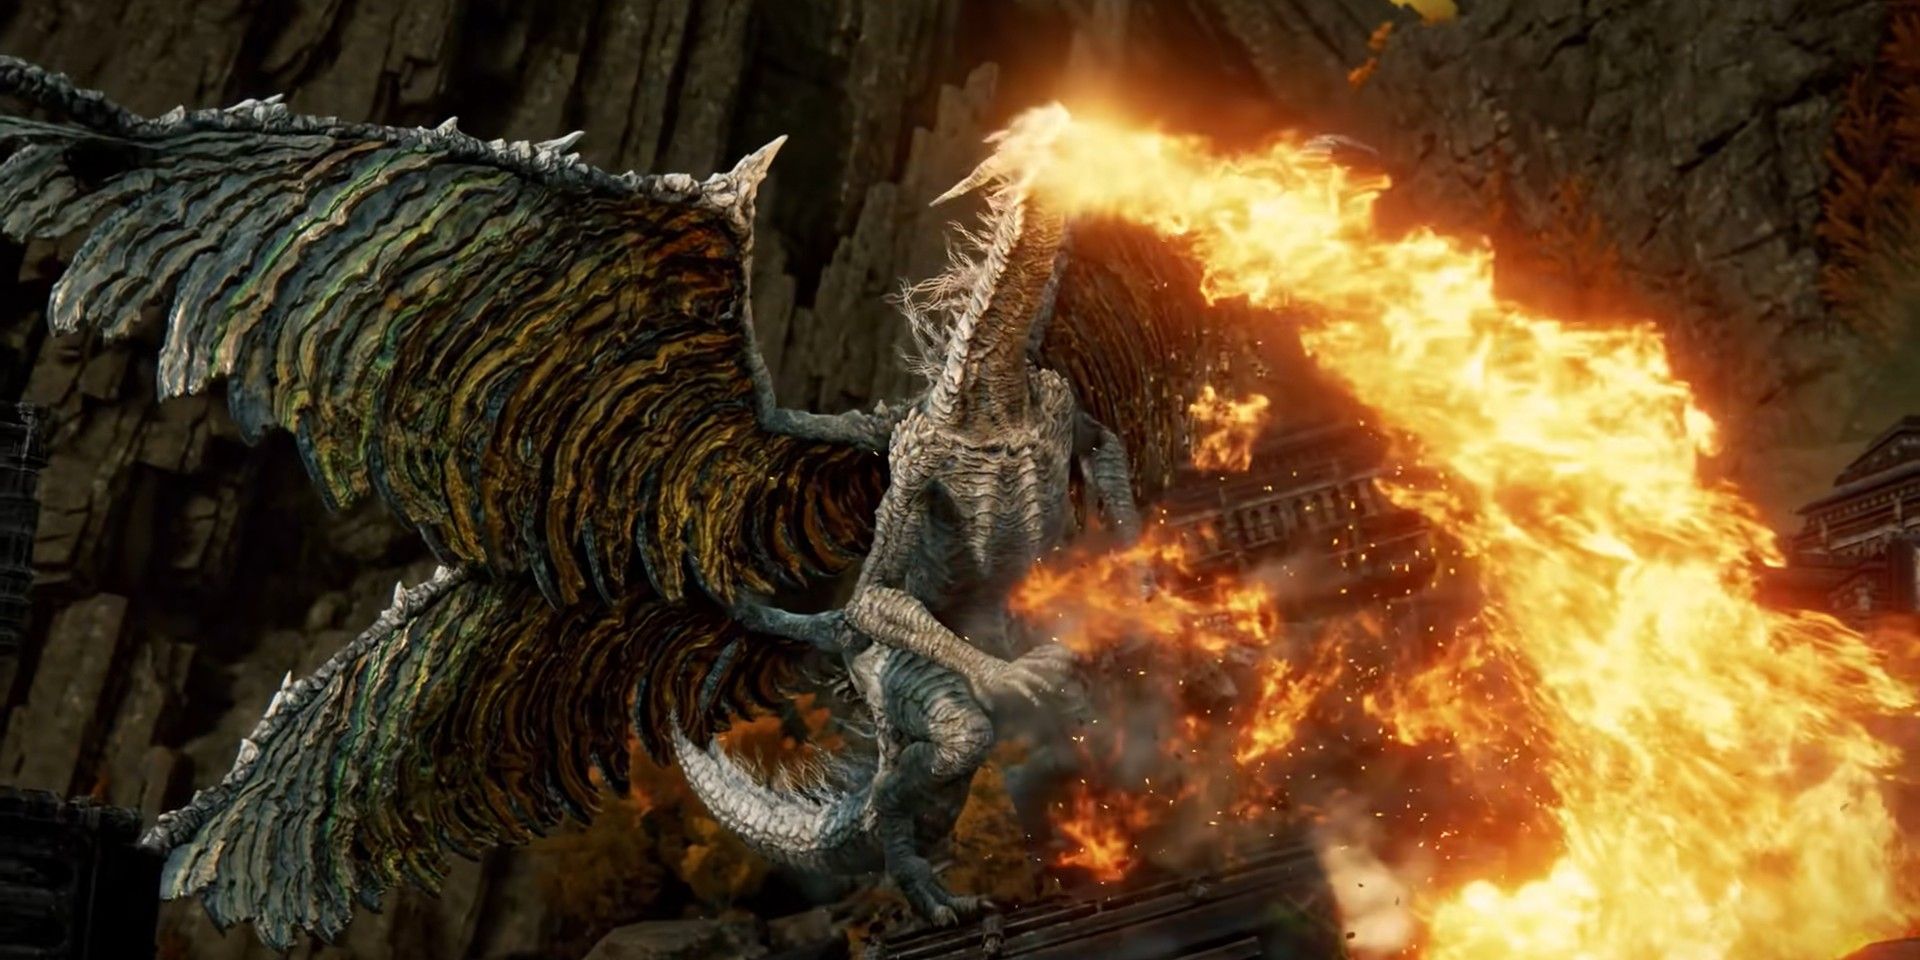 A dragon breathing fire in the Elden Ring trailer.